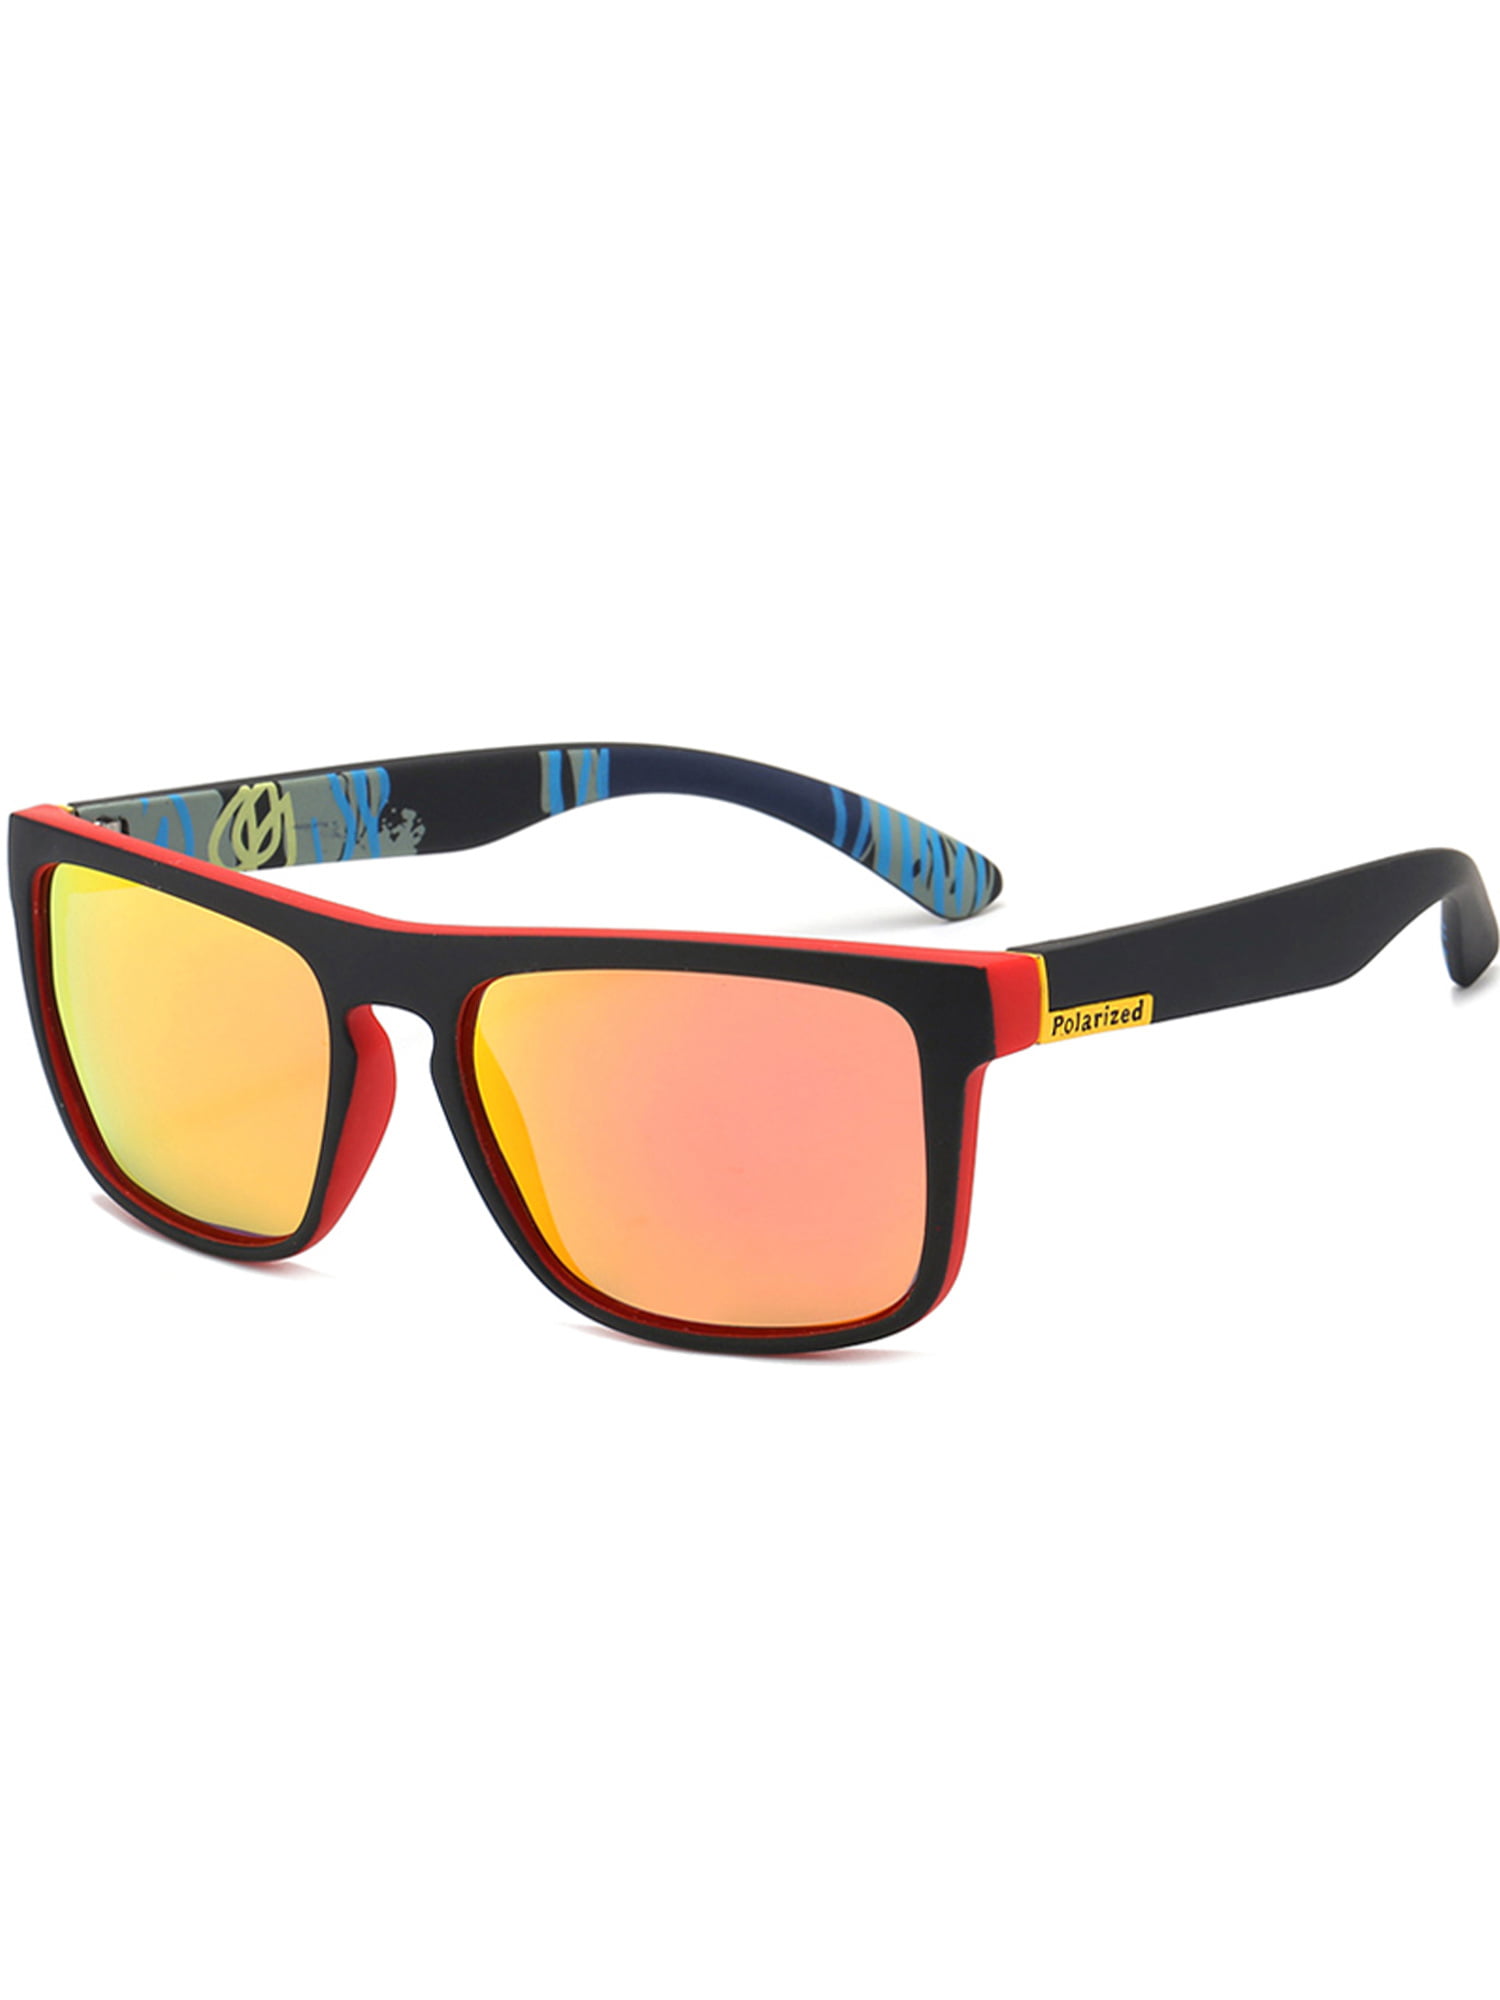 VIAHDA Men's Polarized Sunglasses Sport Outdoor Driving Fishing Square Glasses